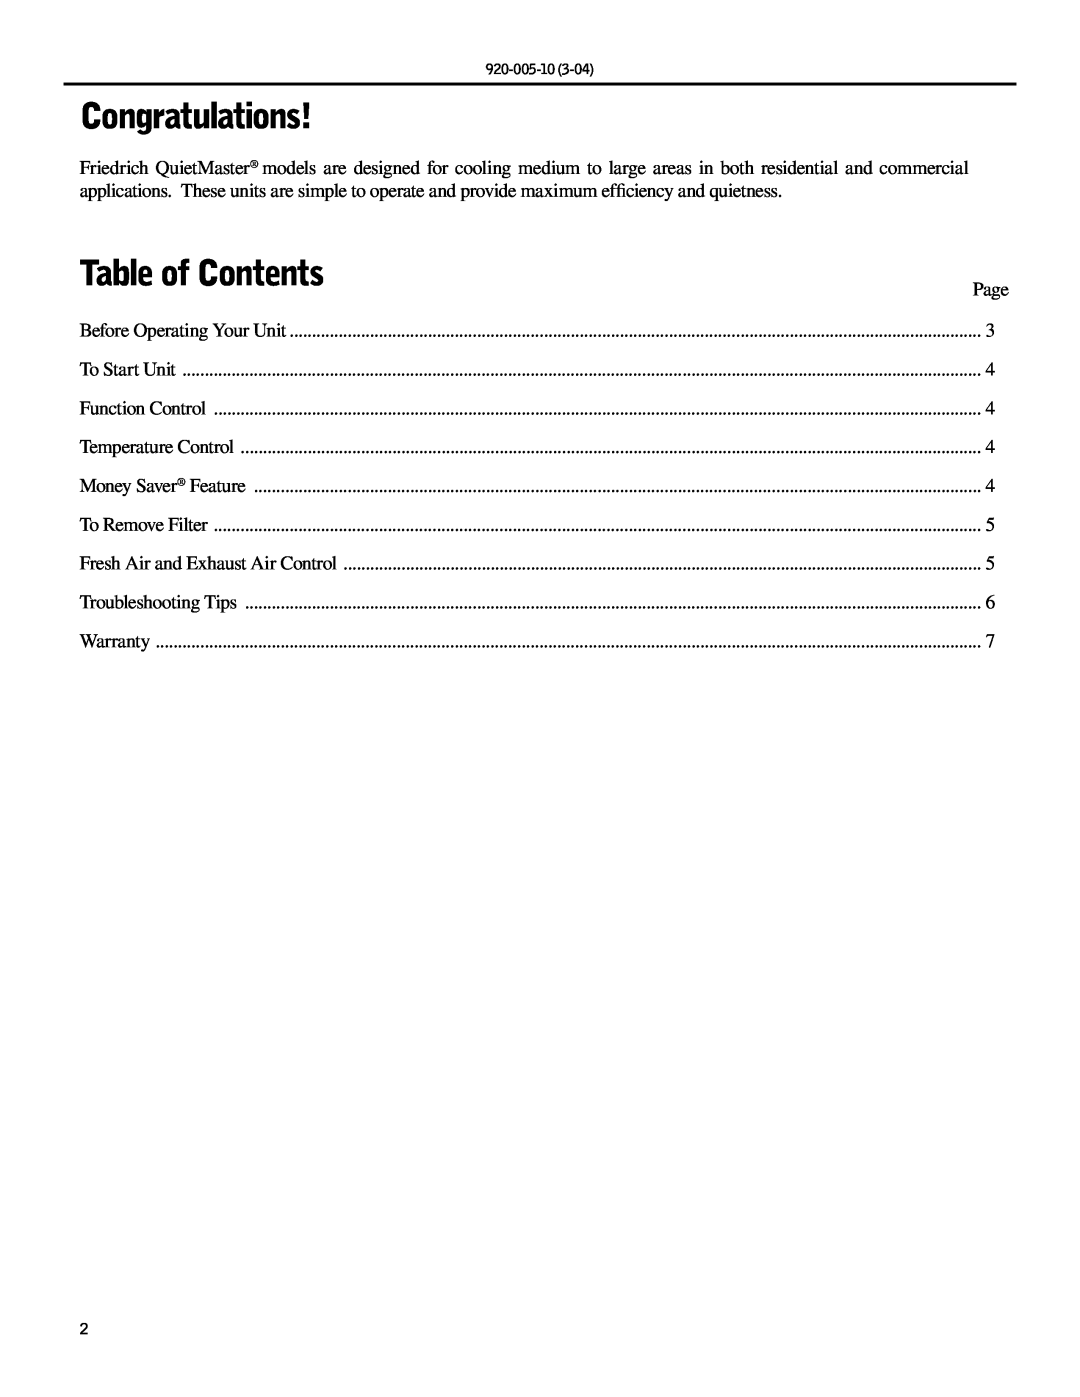 Friedrich KS10, KM20 manual Congratulations, Table of Contents 